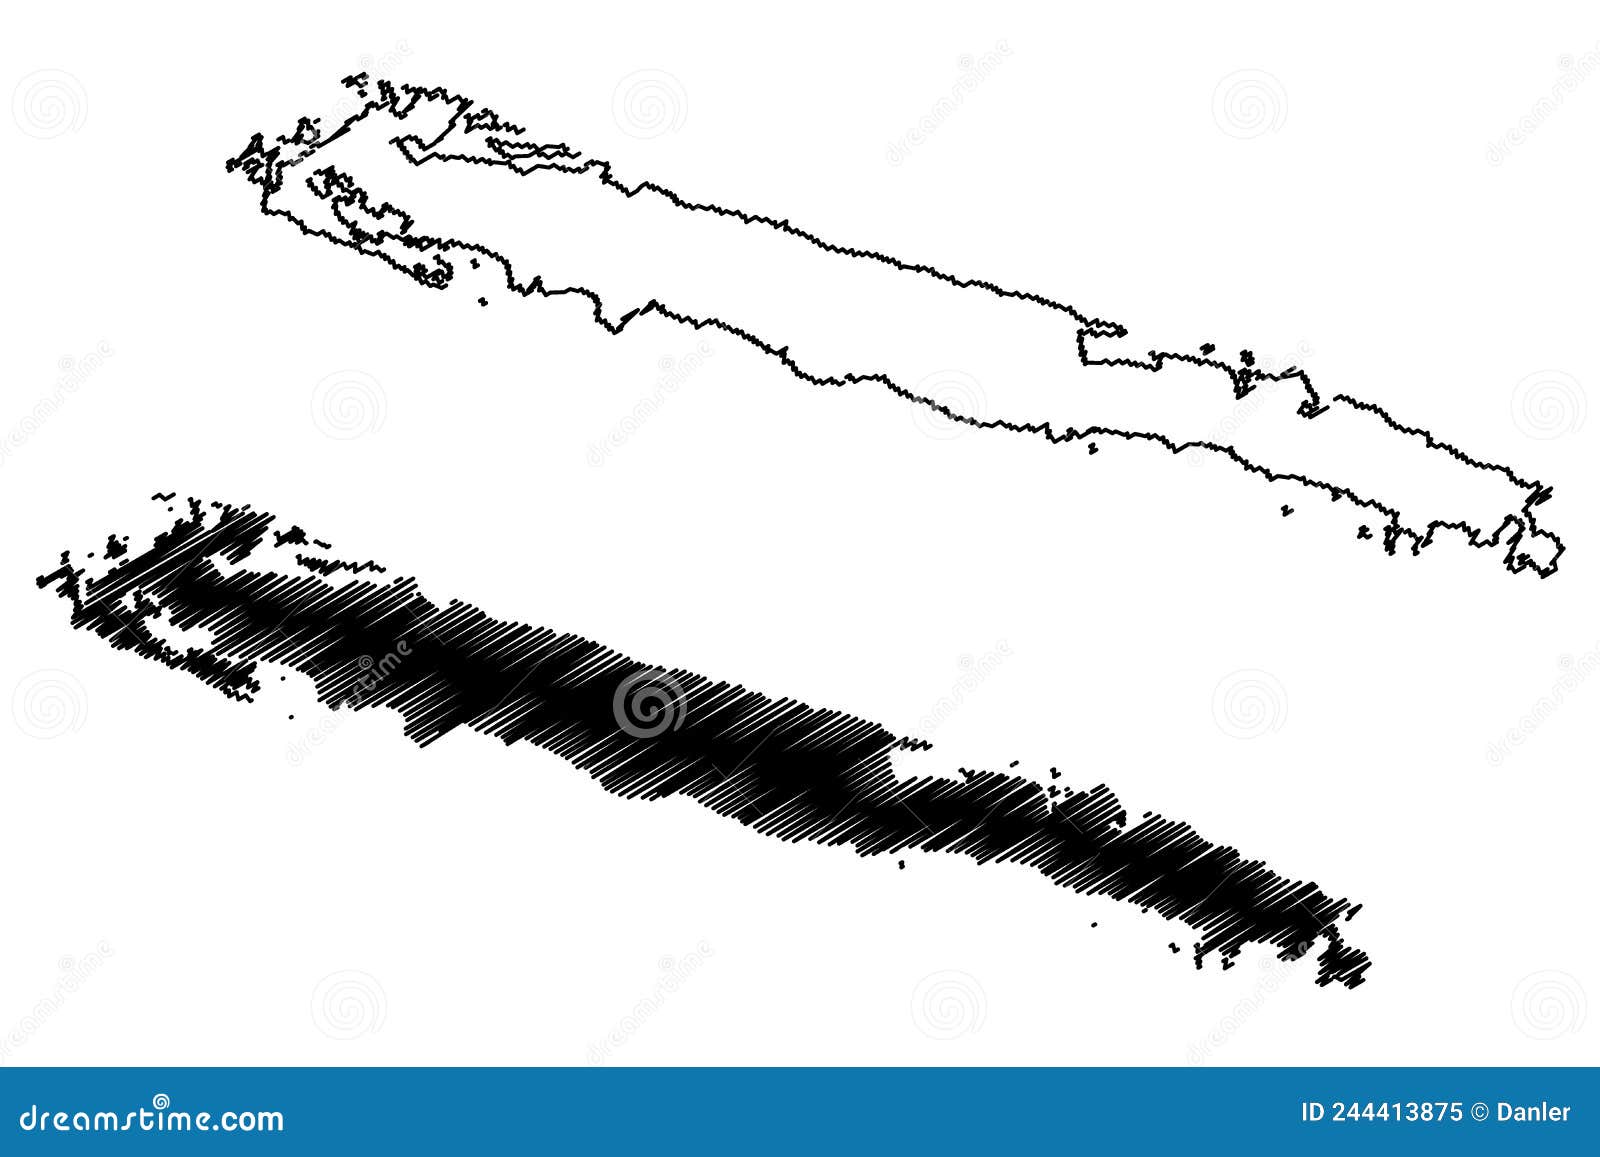 mljet island republic of croatia, dalmatian archipielago, adriatic sea map  , scribble sketch mljet map